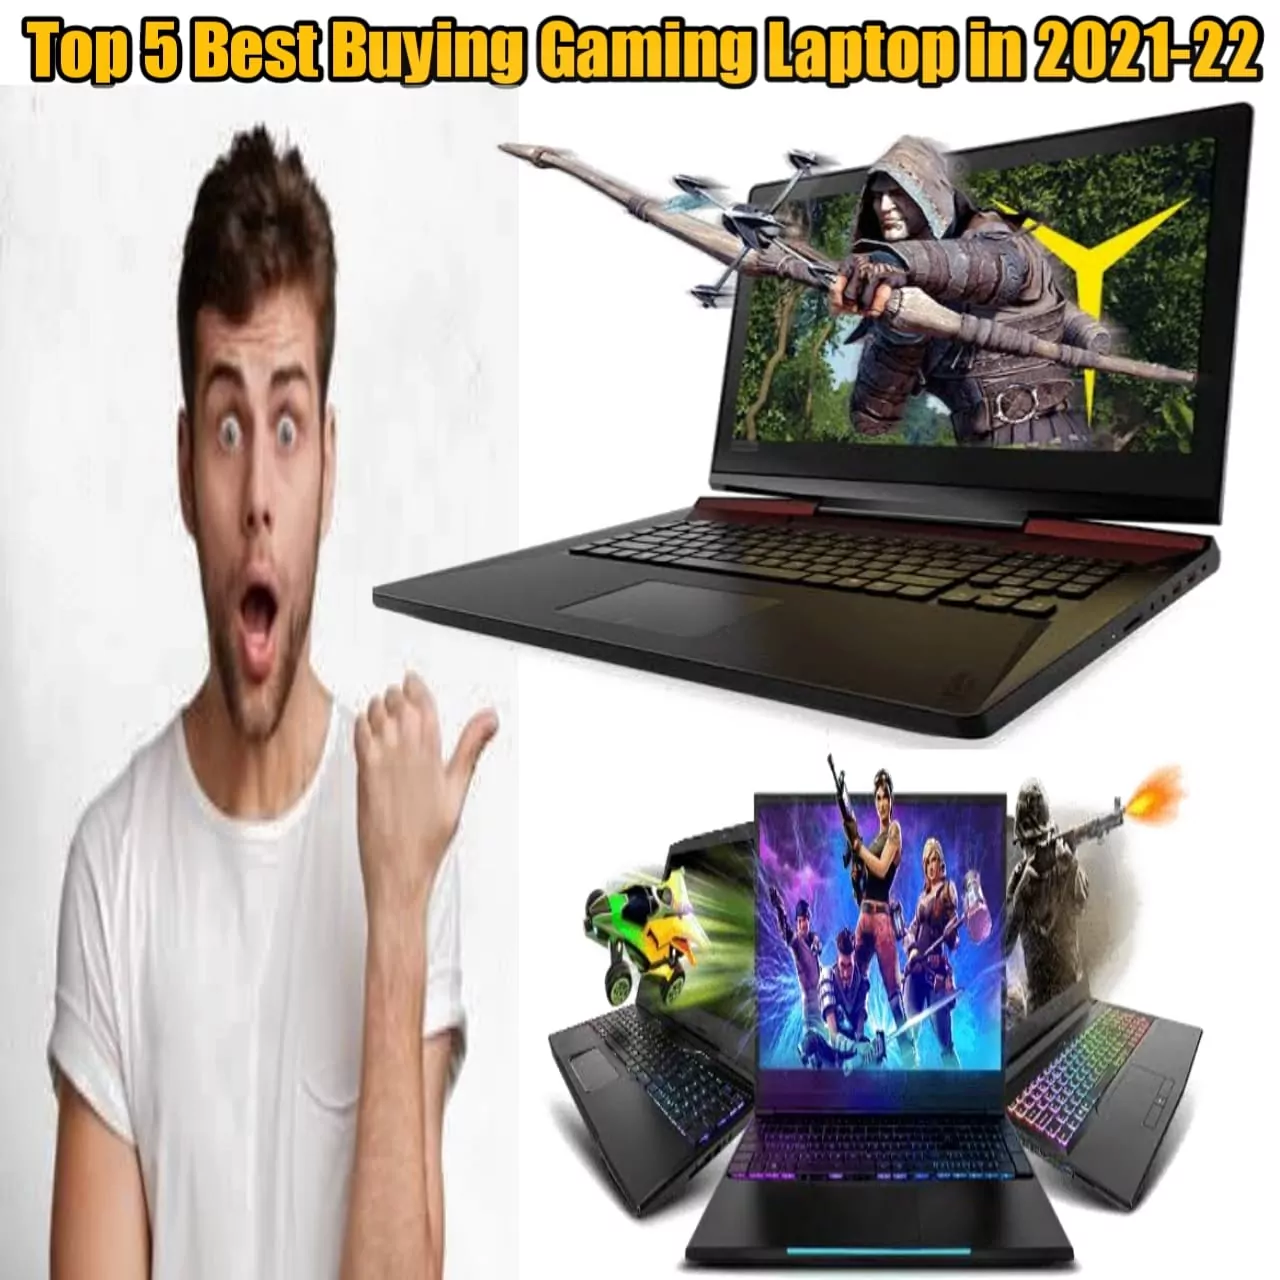 Top 10 Best buying gaming laptops in 2021-22